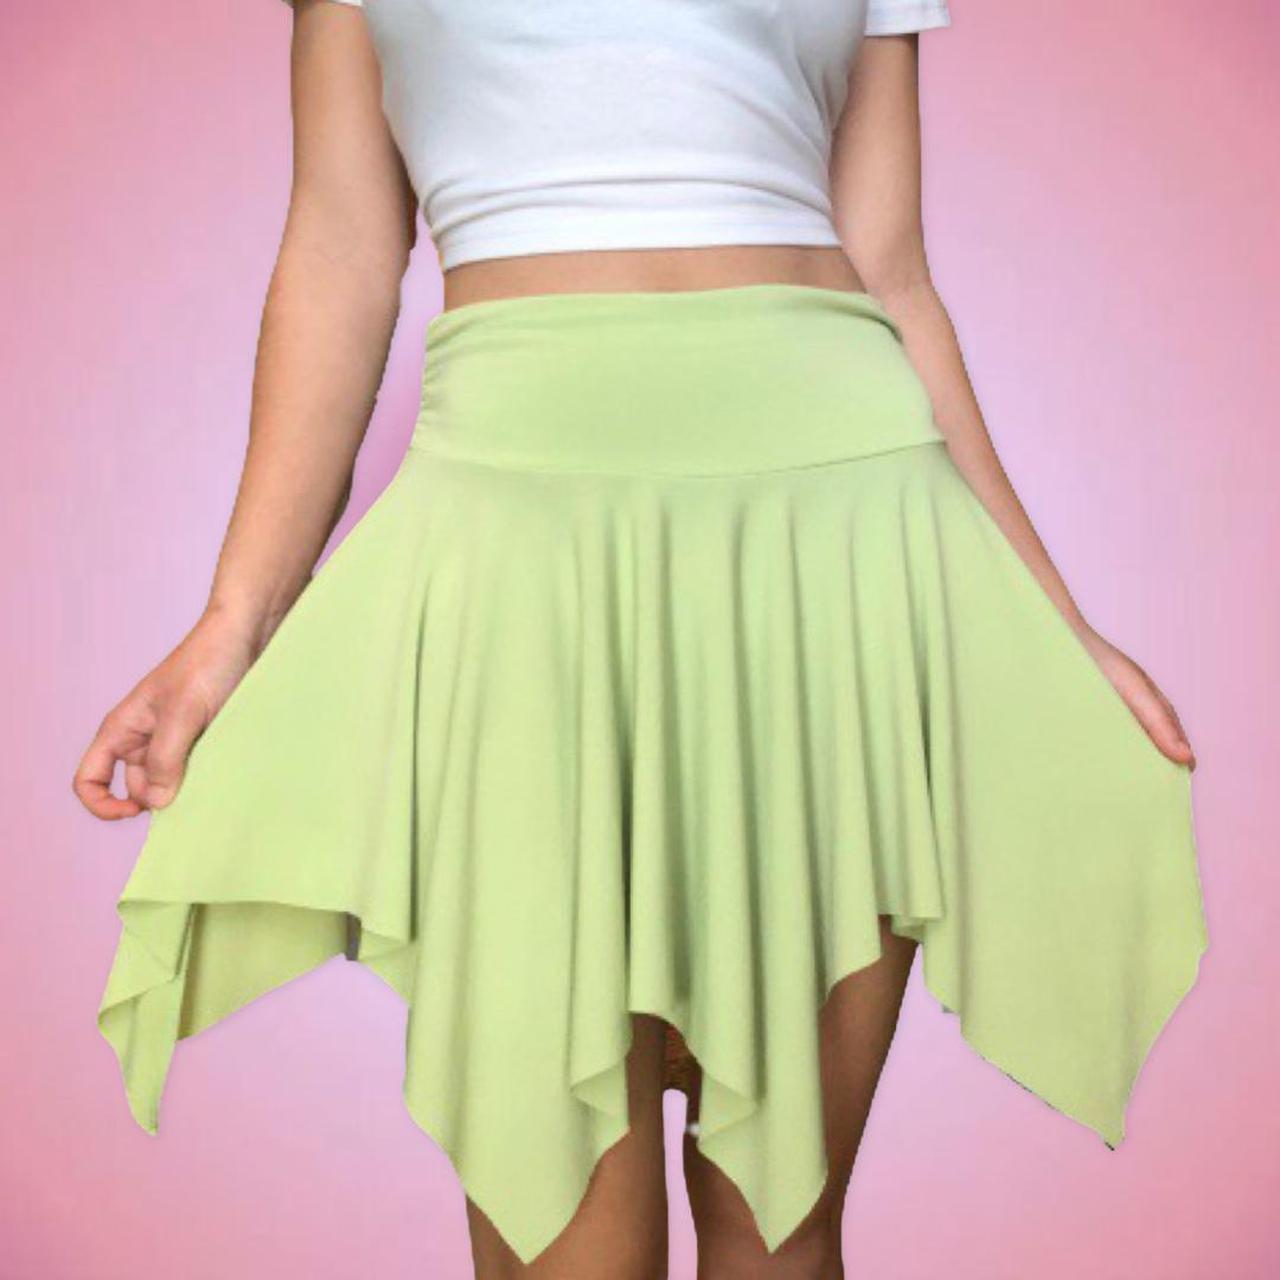 Product Image 3 - fairy skirt

adorable vintage 90s fairycore/cottagecore